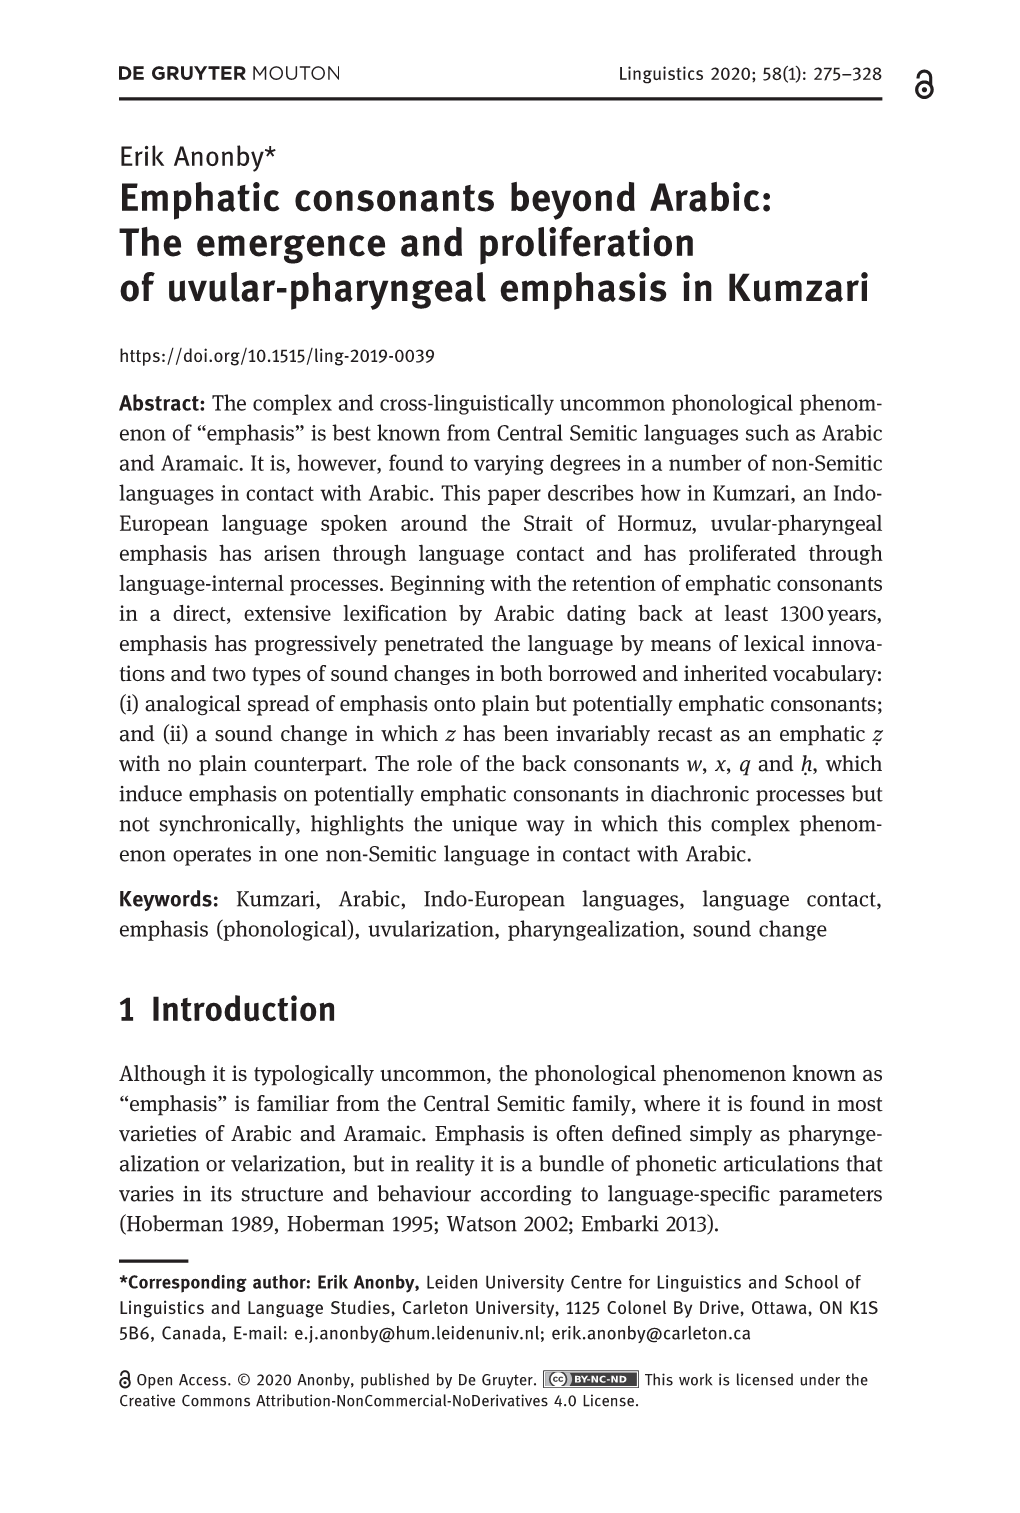 Emphatic Consonants Beyond Arabic: the Emergence and Proliferation of Uvular-Pharyngeal Emphasis in Kumzari